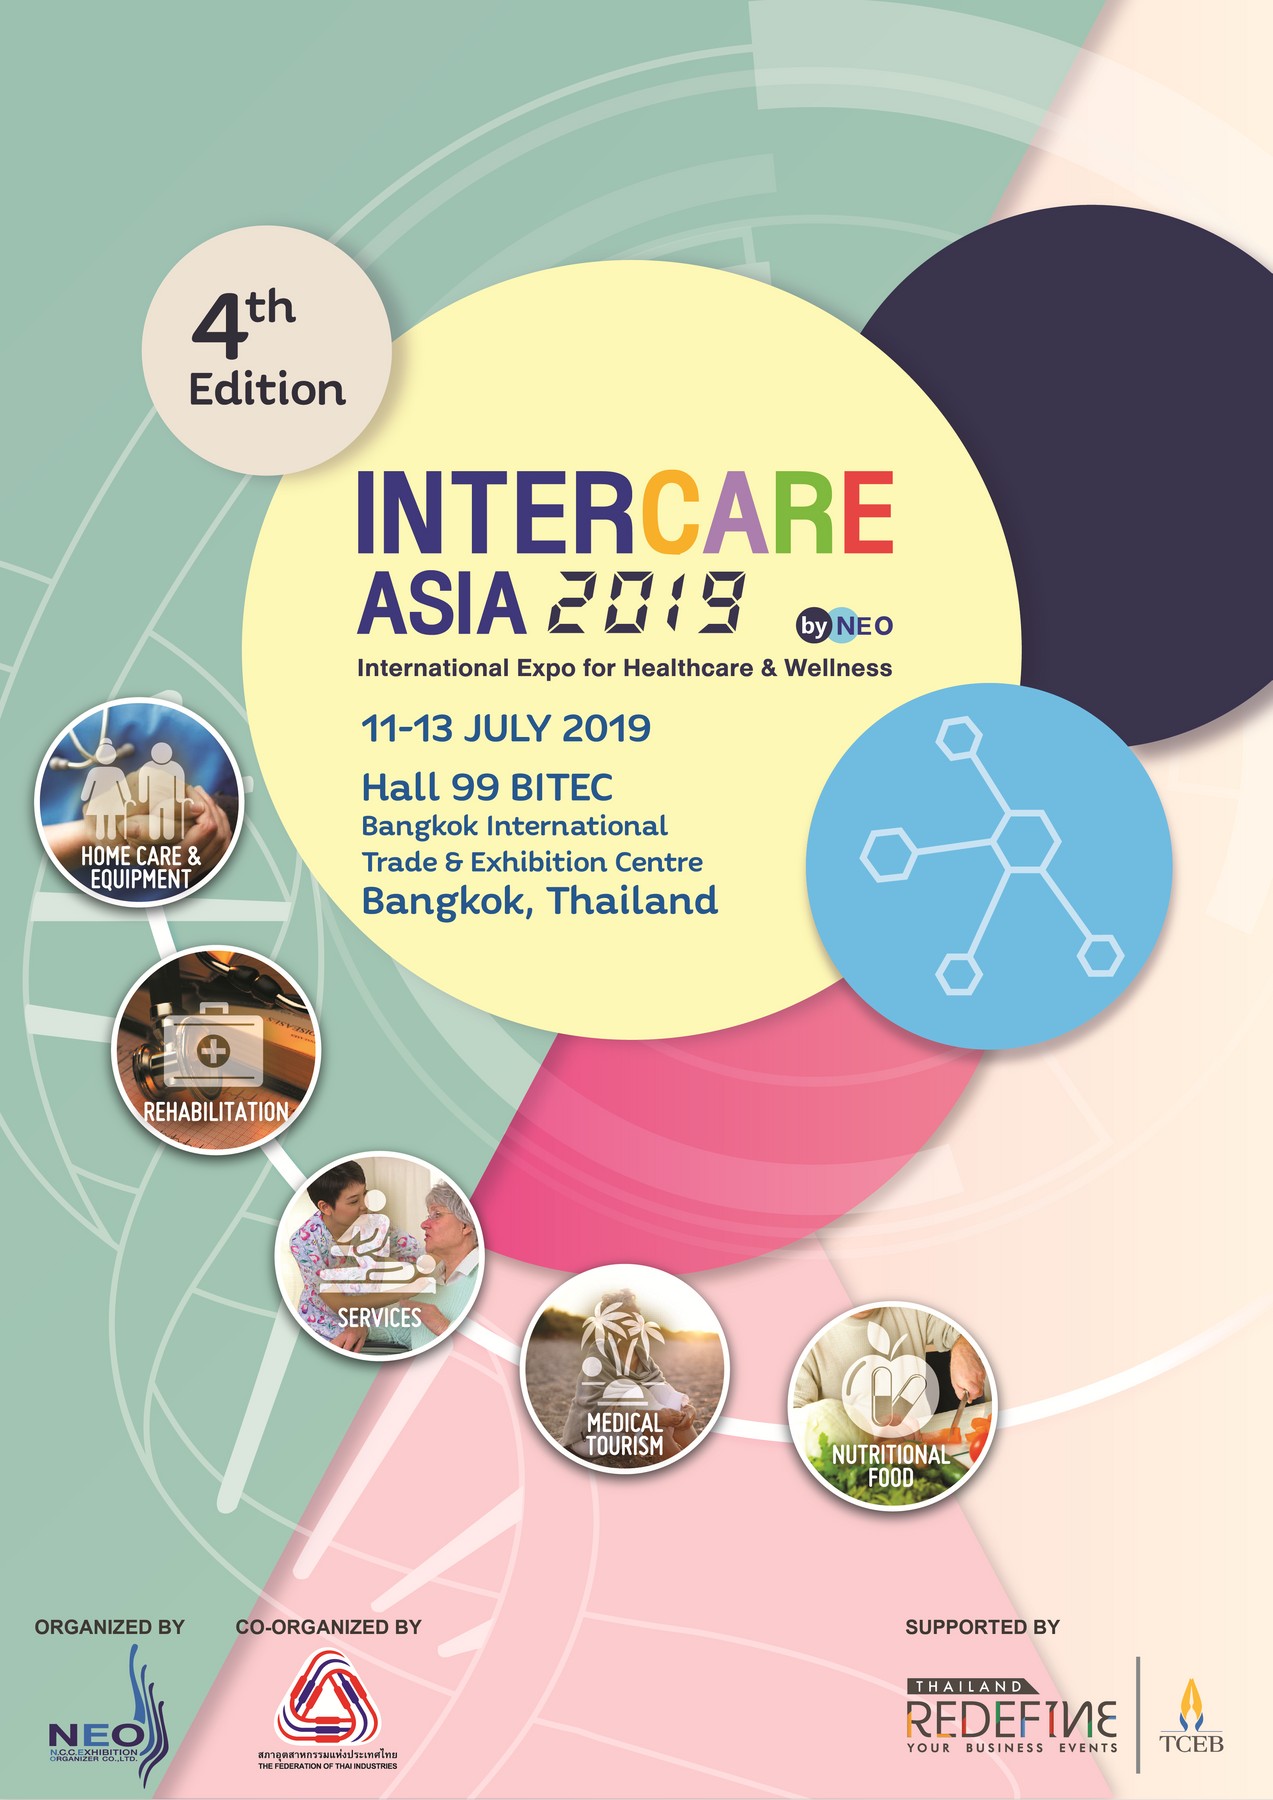 Intercare Asia 2019